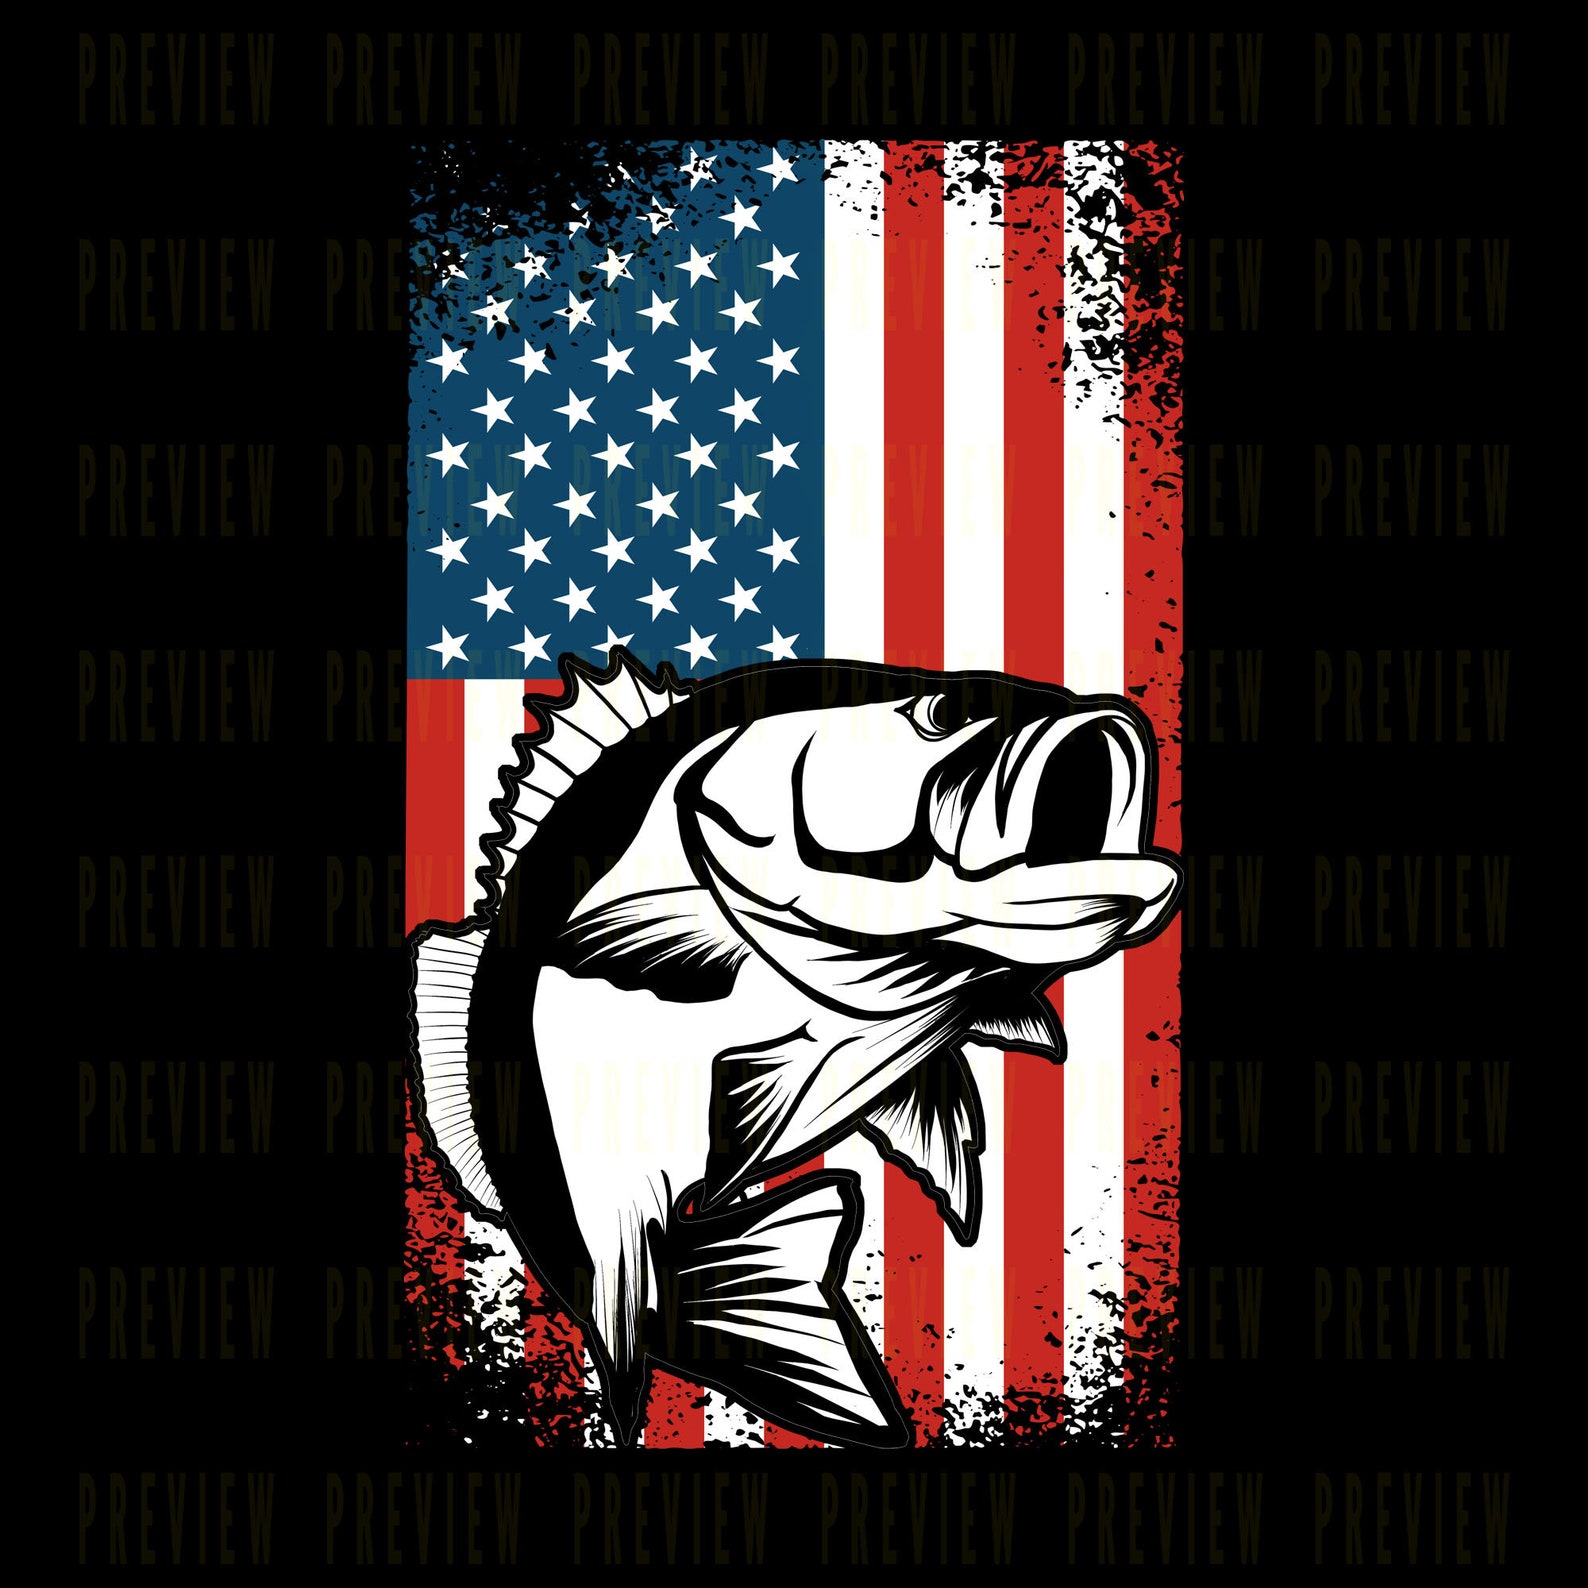 American Flag Bass Fishing Svg Png Jpg Psd Pdf File Types - Etsy